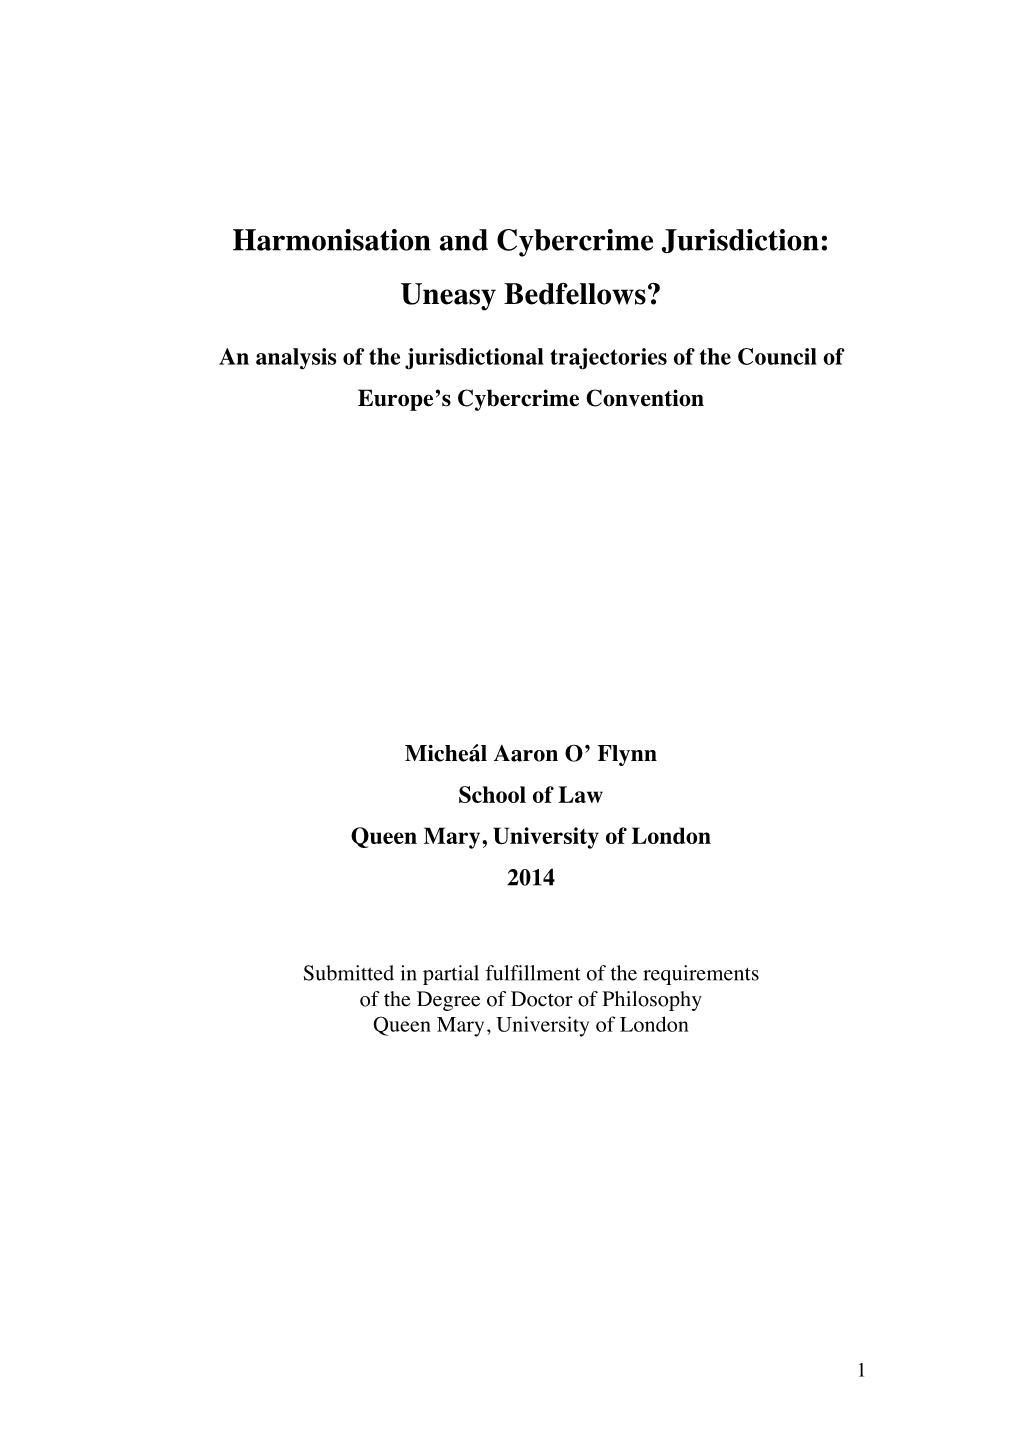 Harmonisation and Cybercrime Jurisdiction: Uneasy Bedfellows?